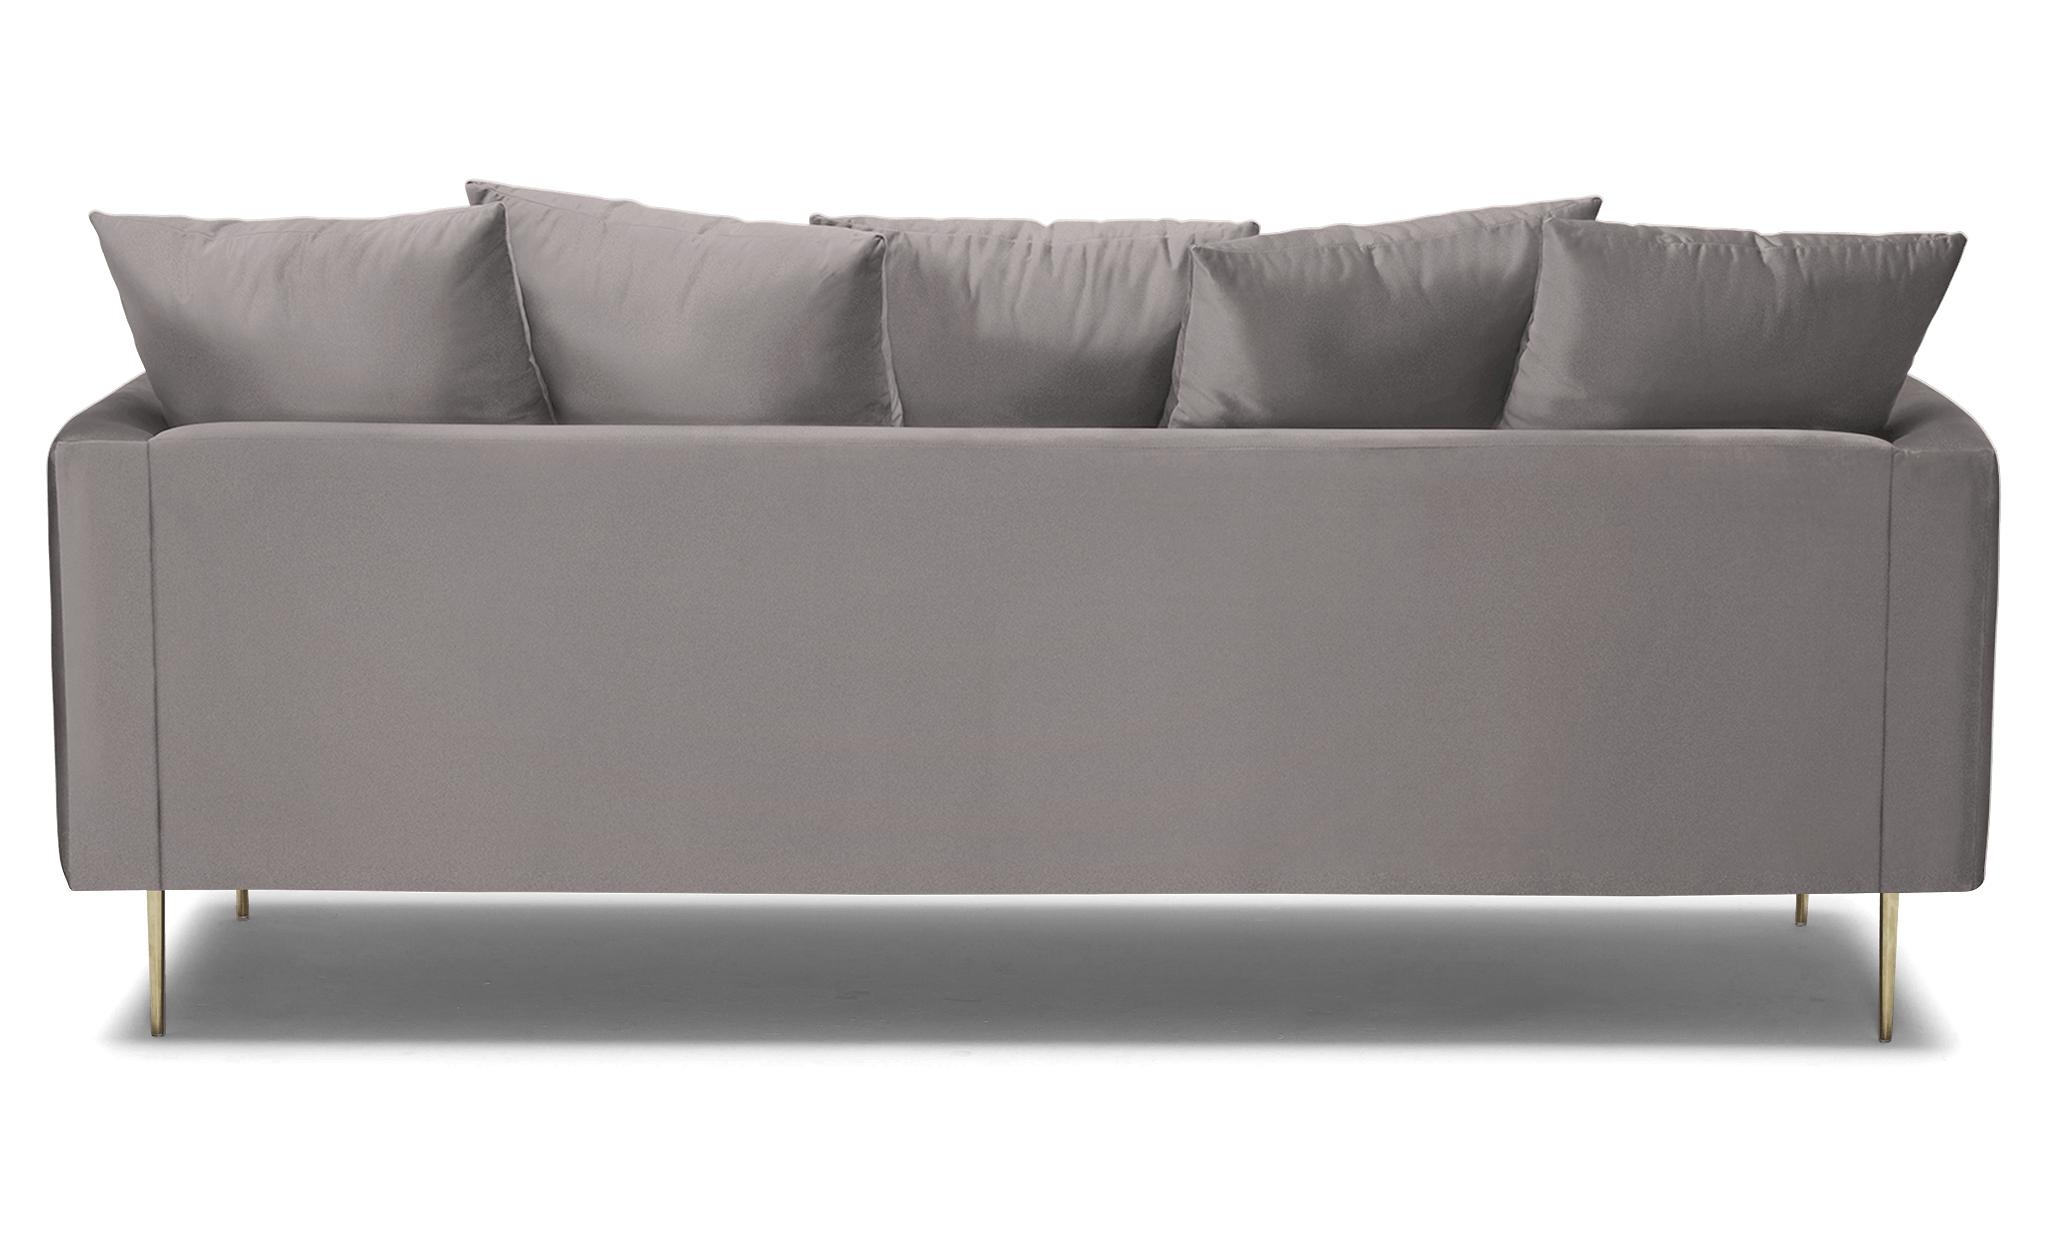 Purple Aime Mid Century Modern Sofa - Sunbrella Premier Wisteria - Image 4